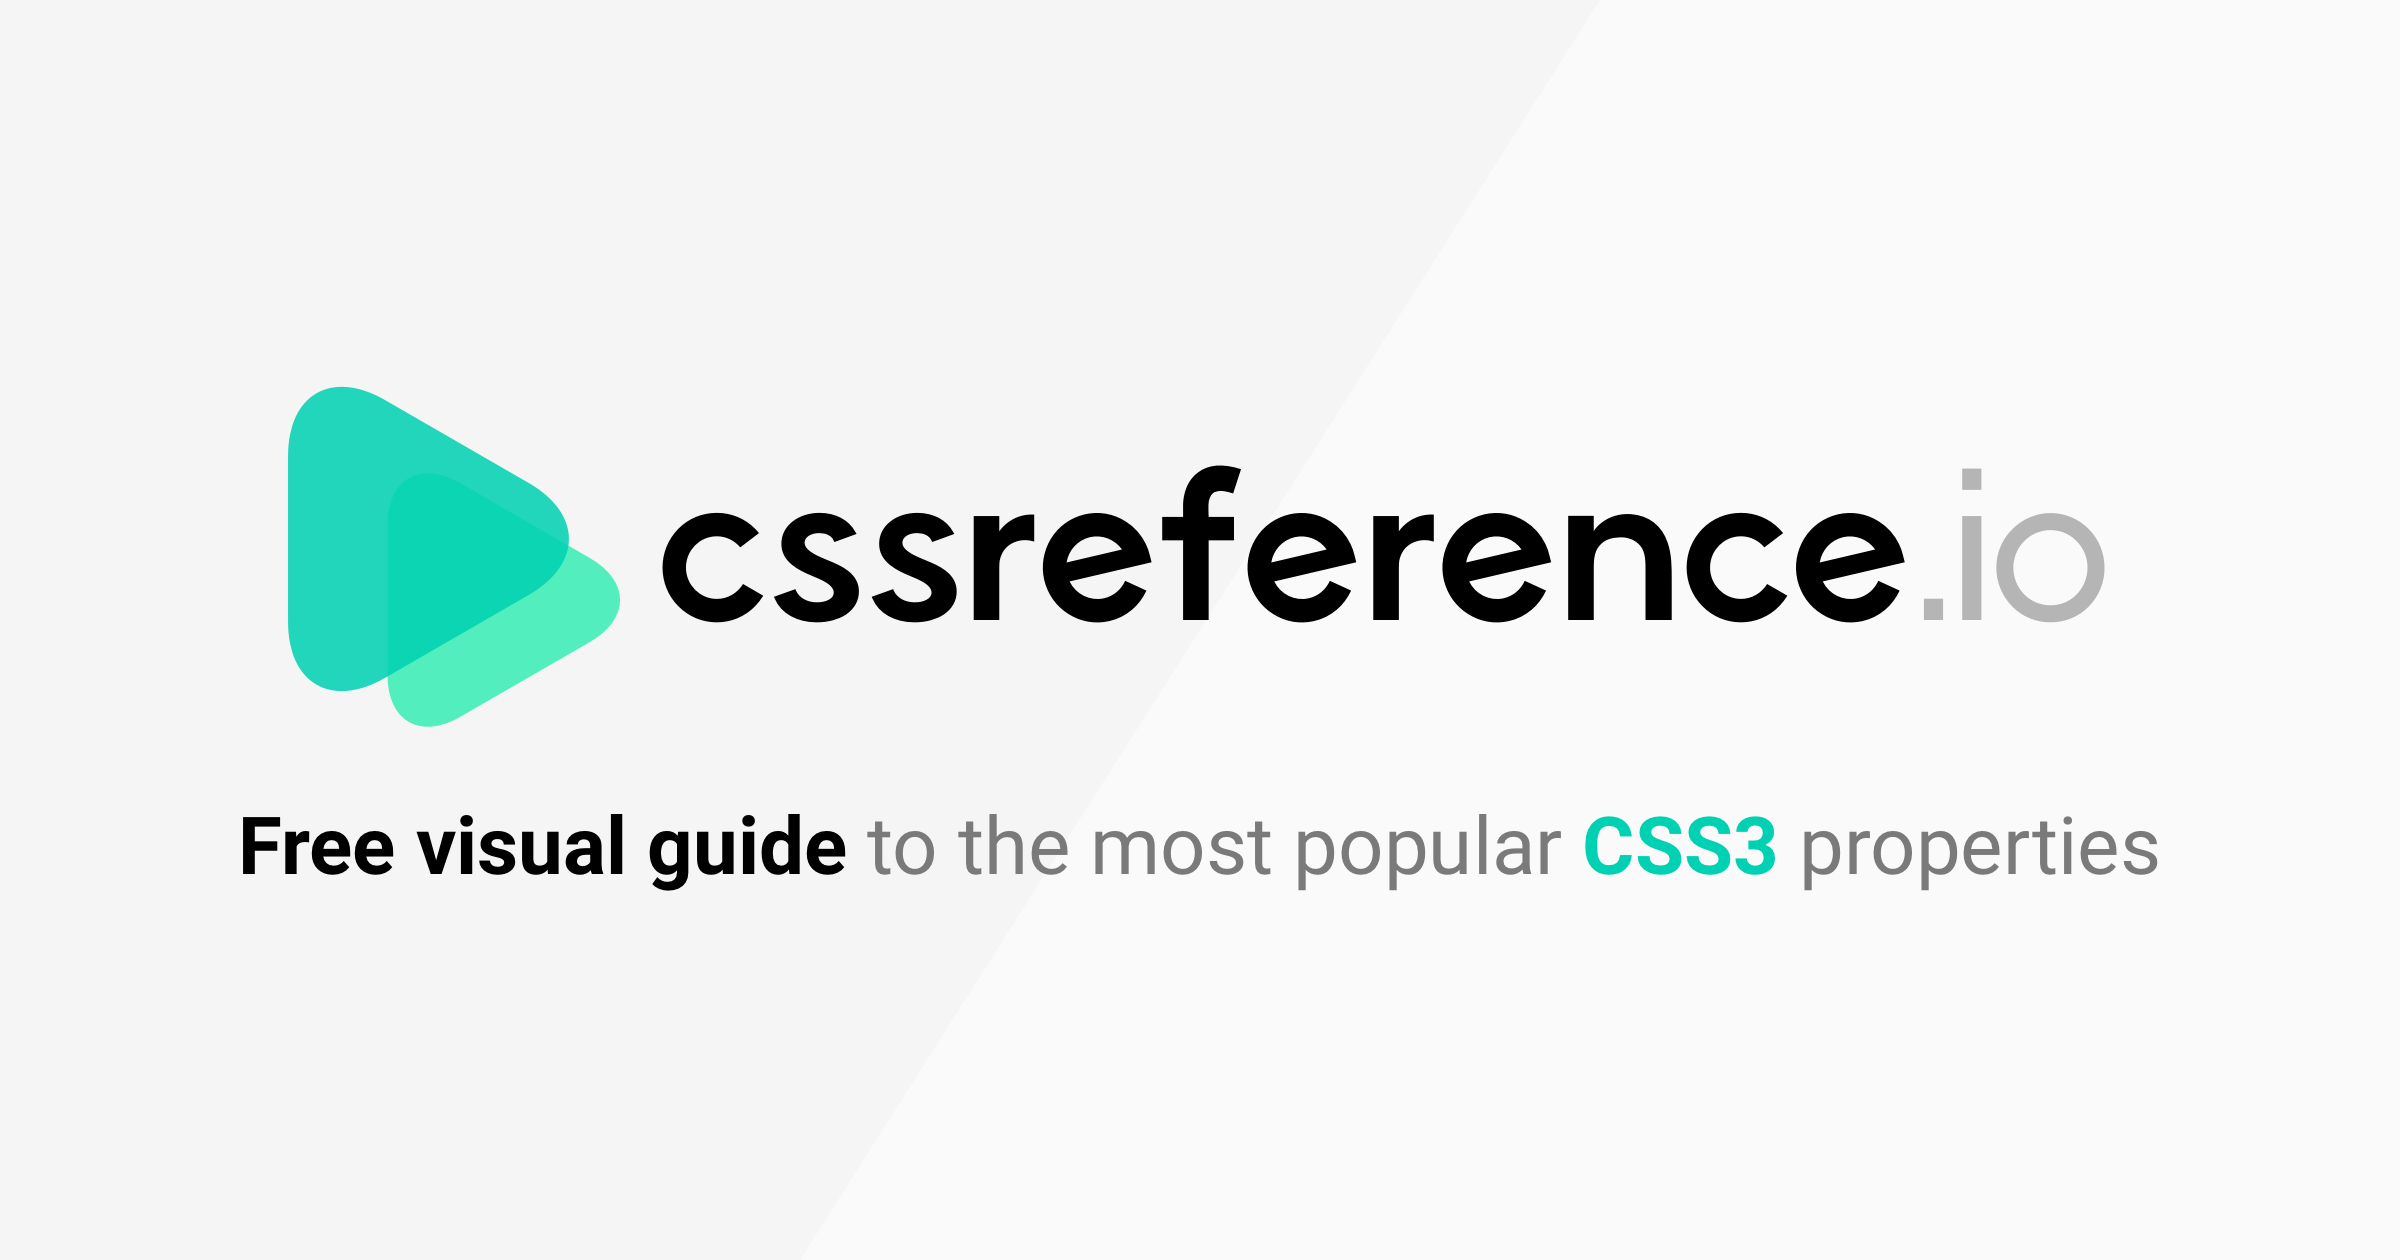 CSS Reference screenshot